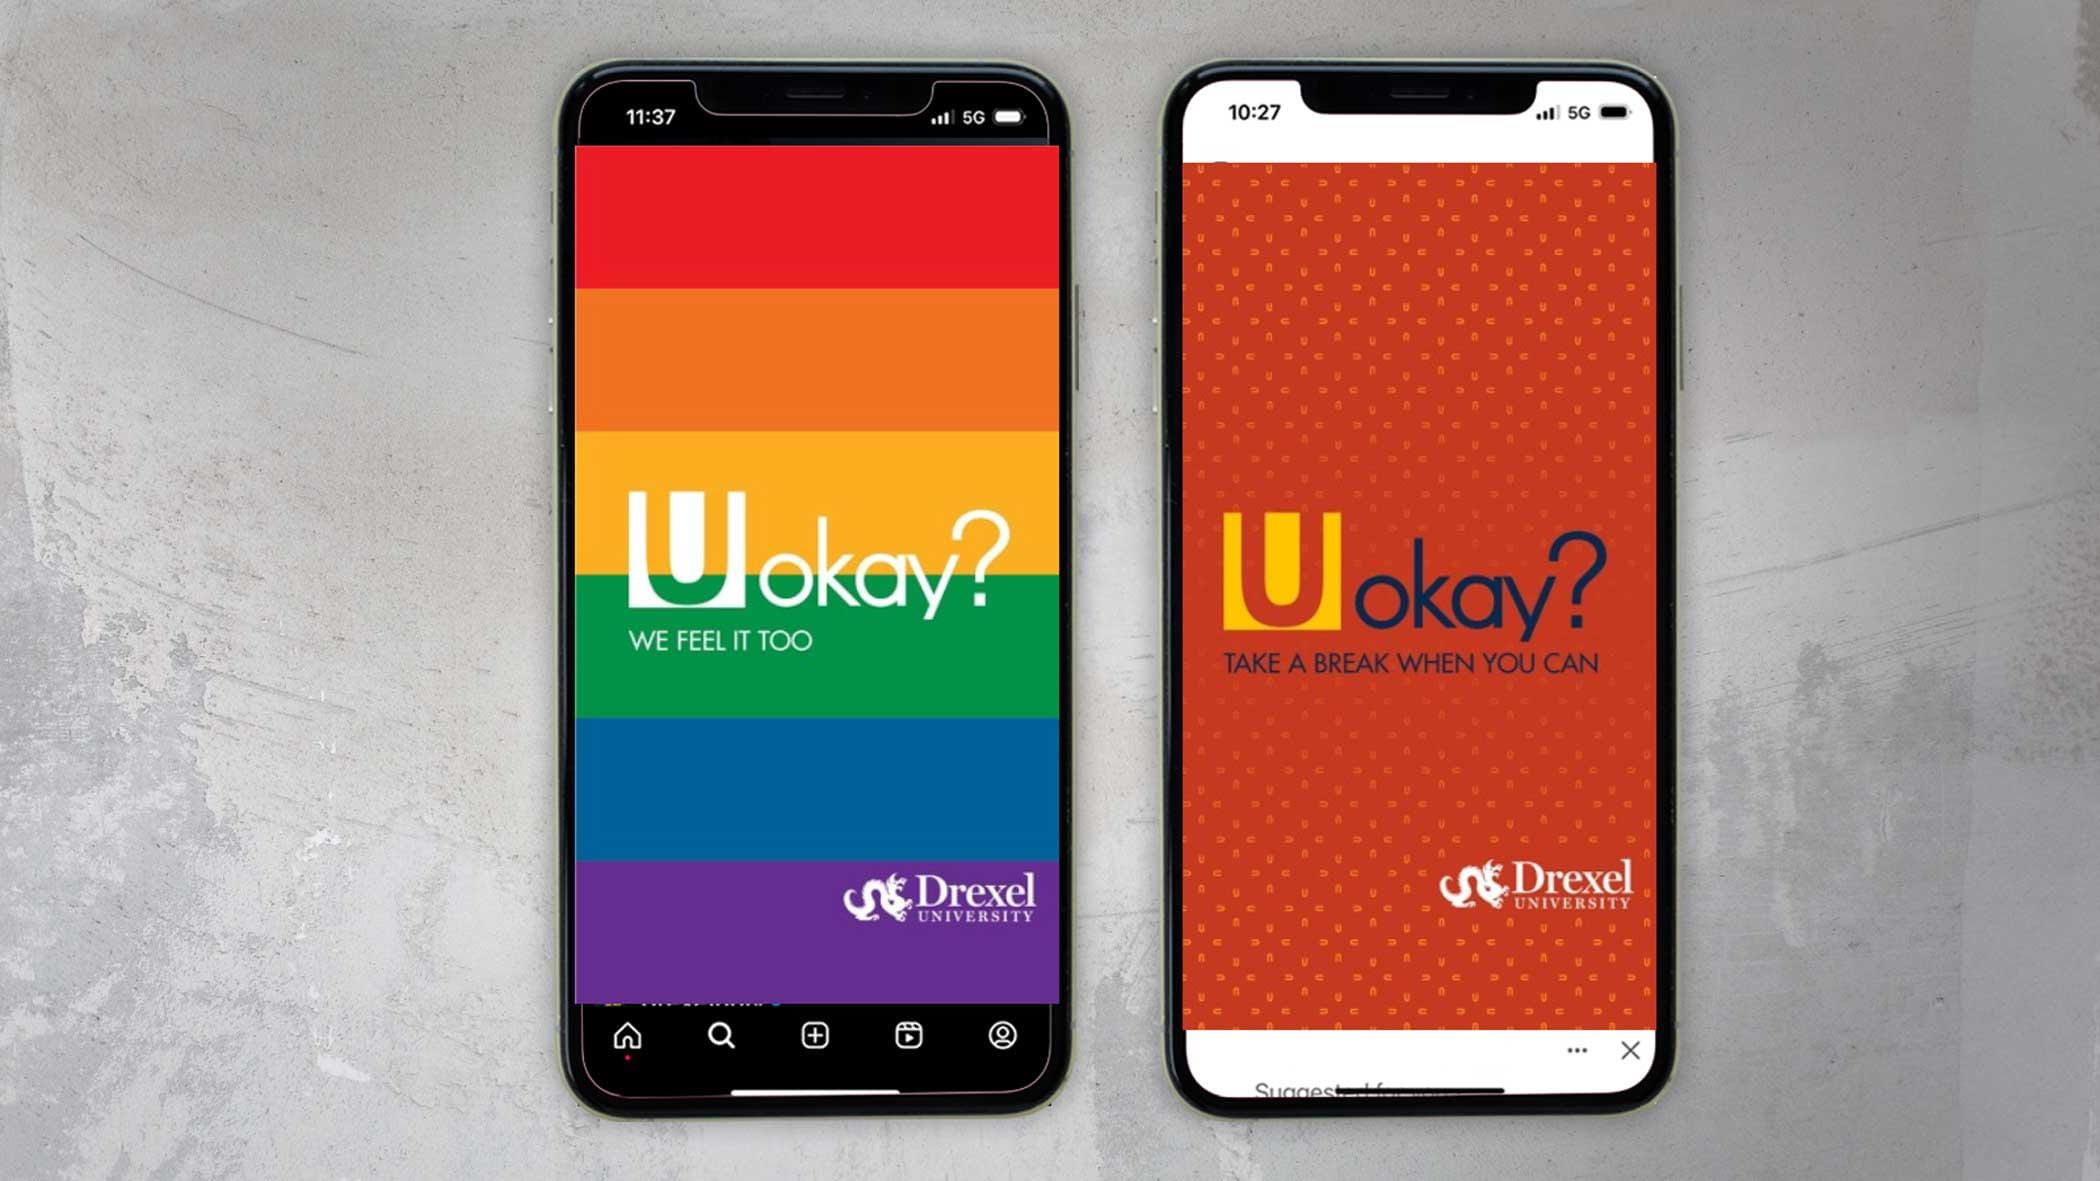 uOkay campaign social media ads